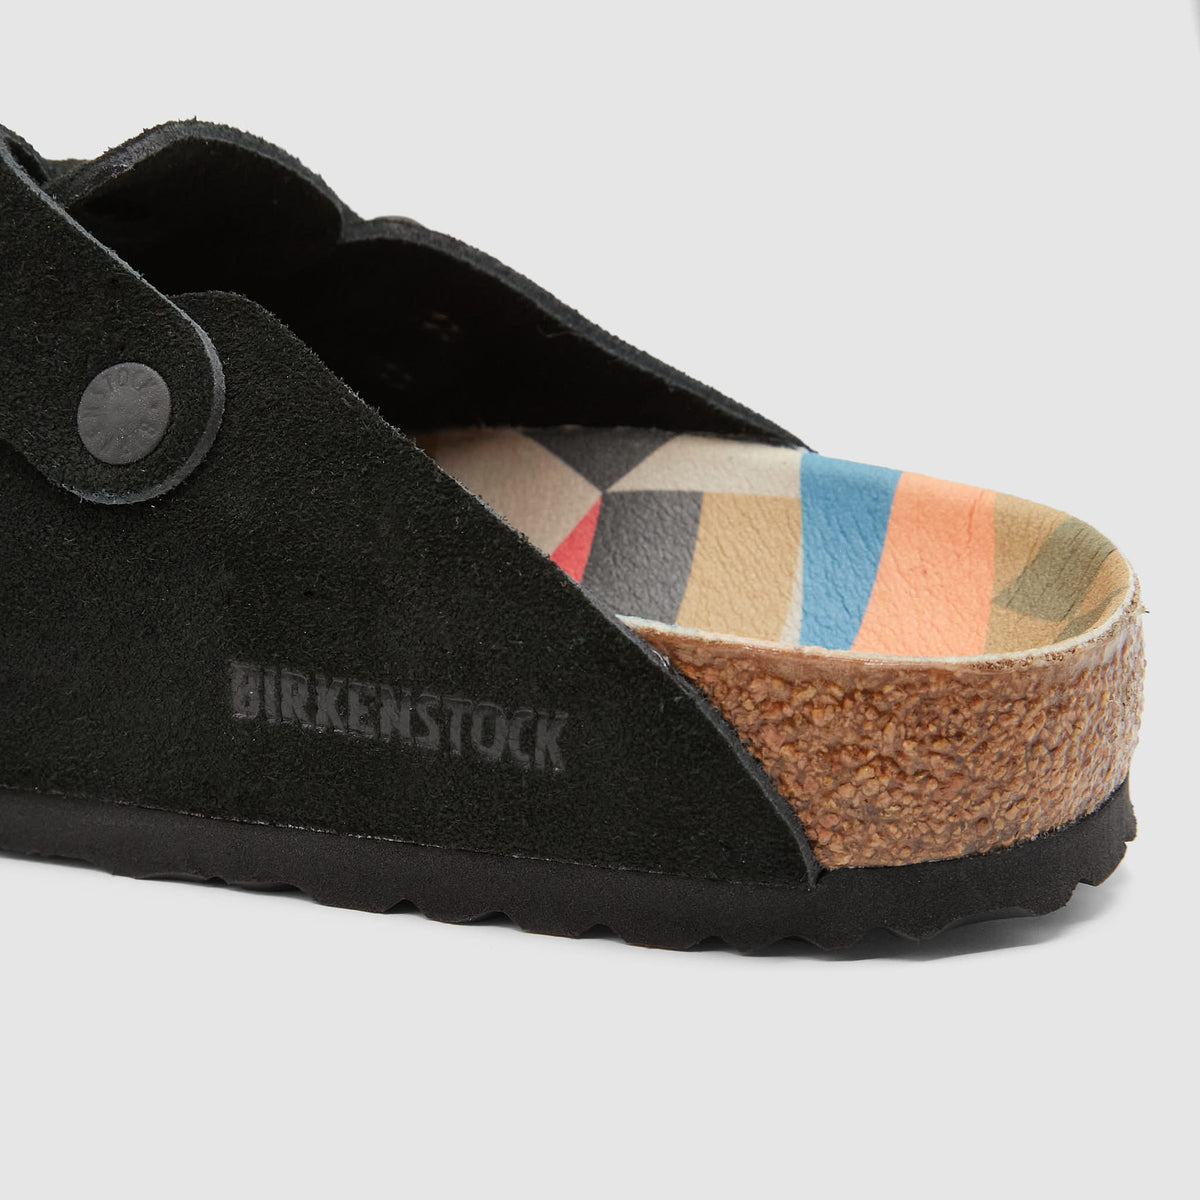 Birkenstock Boston Black with Soft  Multicolored Footbed Clogs